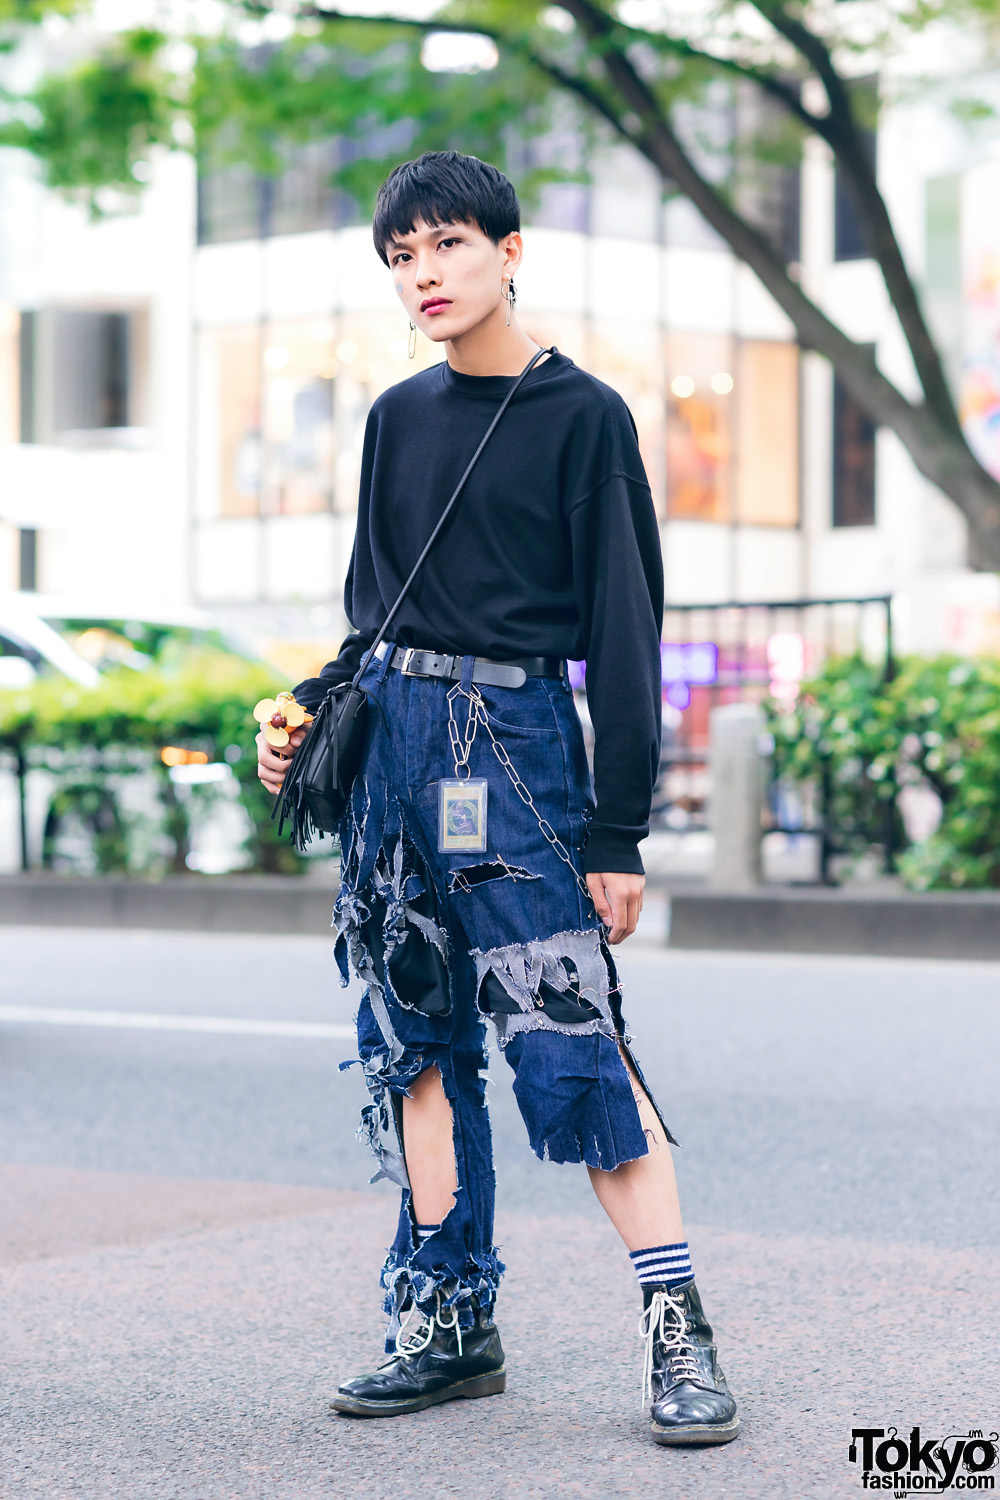 Tokyo Vintage & Remake Streetwear Style w/ Ripped Jeans, Fringe Bag, WEGO, Dr. Martens & Yu-Gi-Oh!